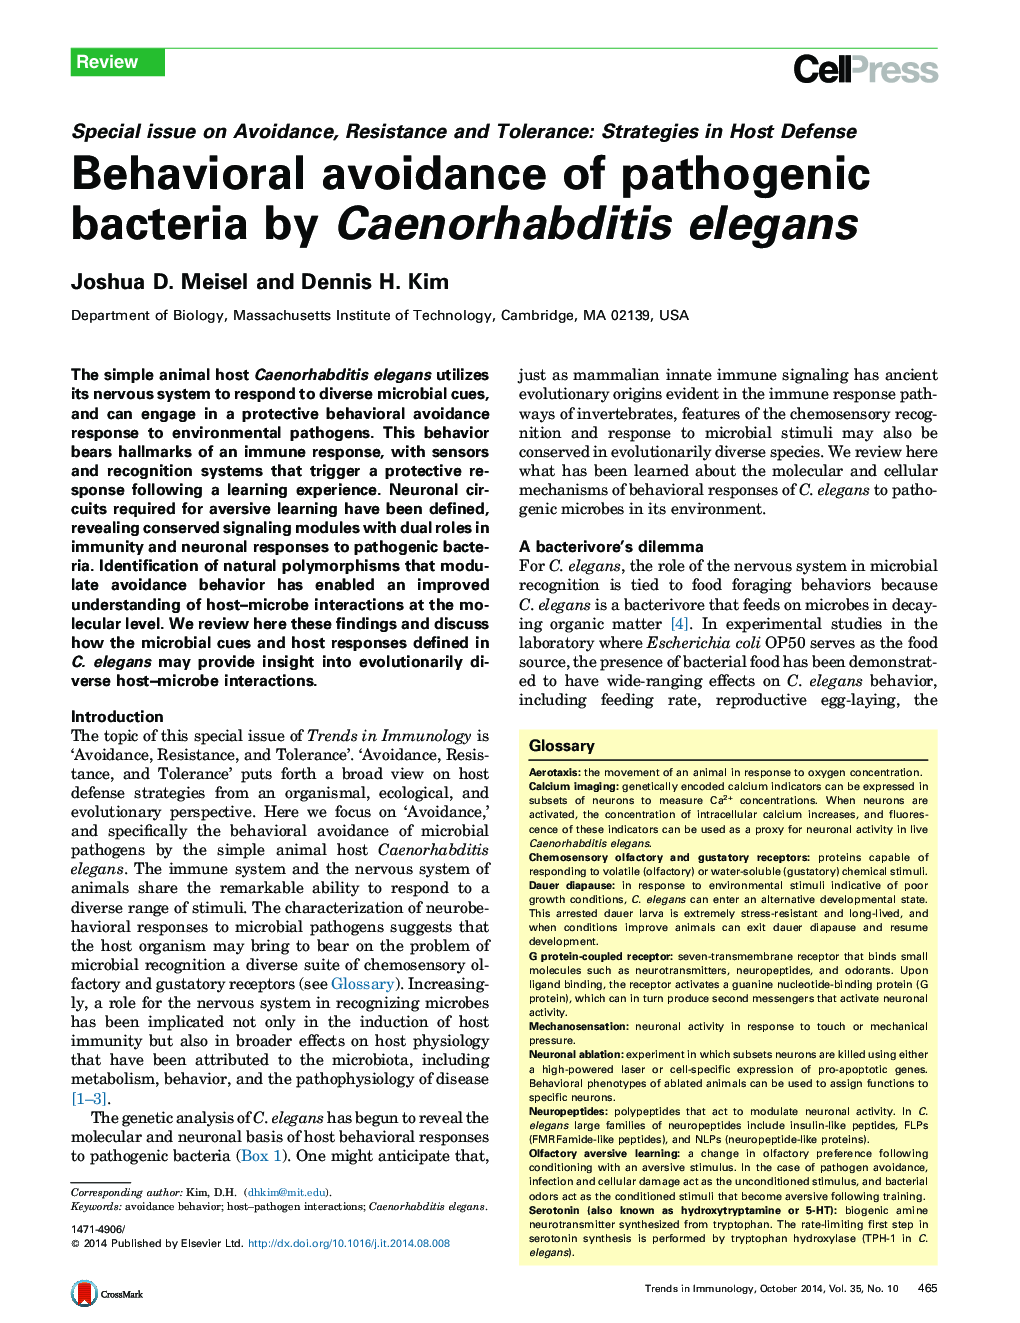 Behavioral avoidance of pathogenic bacteria by Caenorhabditis elegans